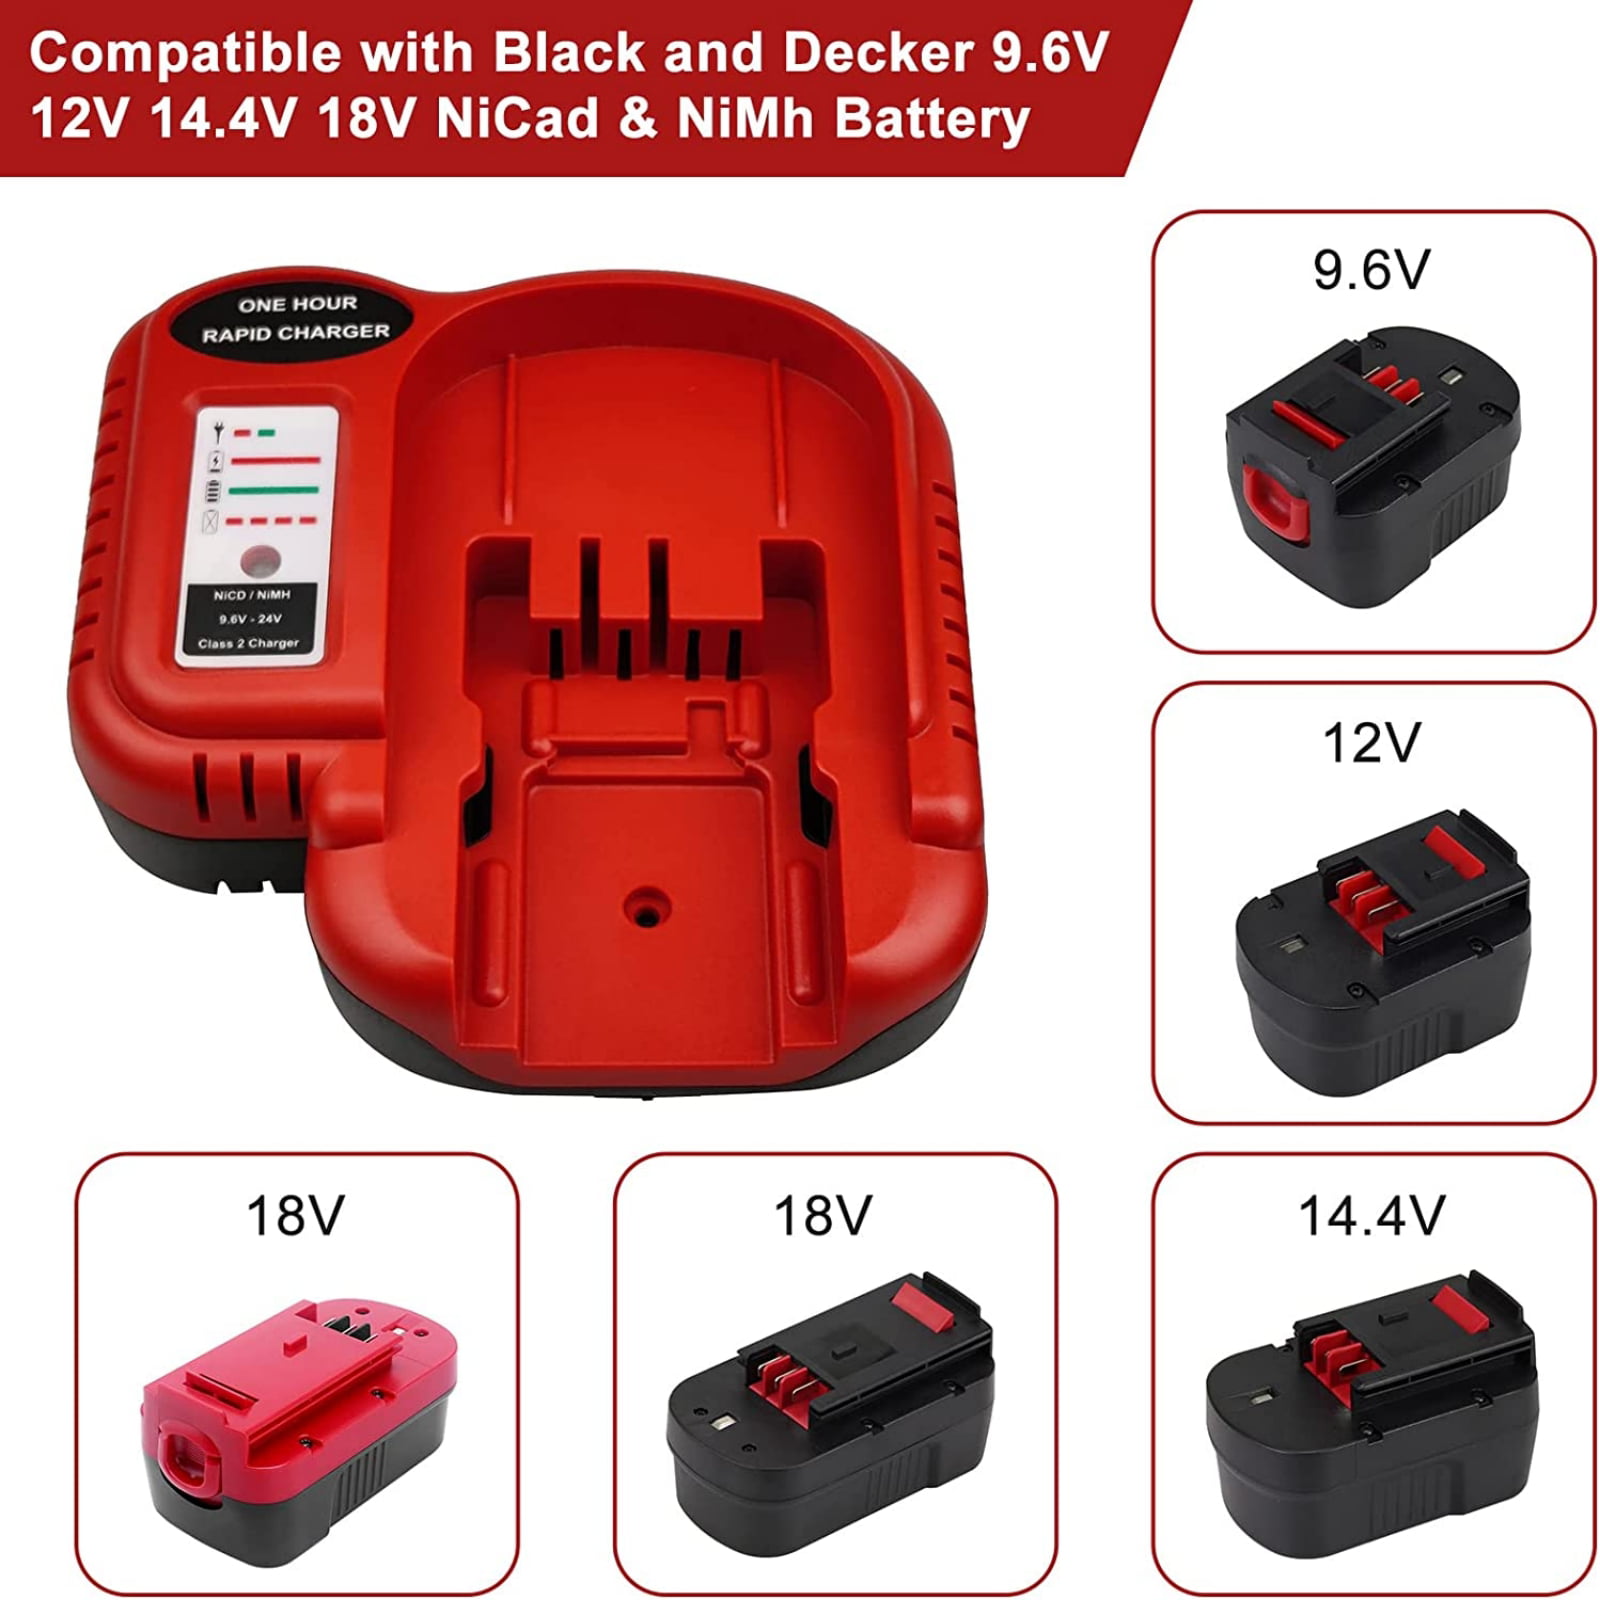 Replacement Black & Decker 9.6V-18V-24V NiCd NiMH Battery Charger BDCCN24  BDFC240 - RHY Battery